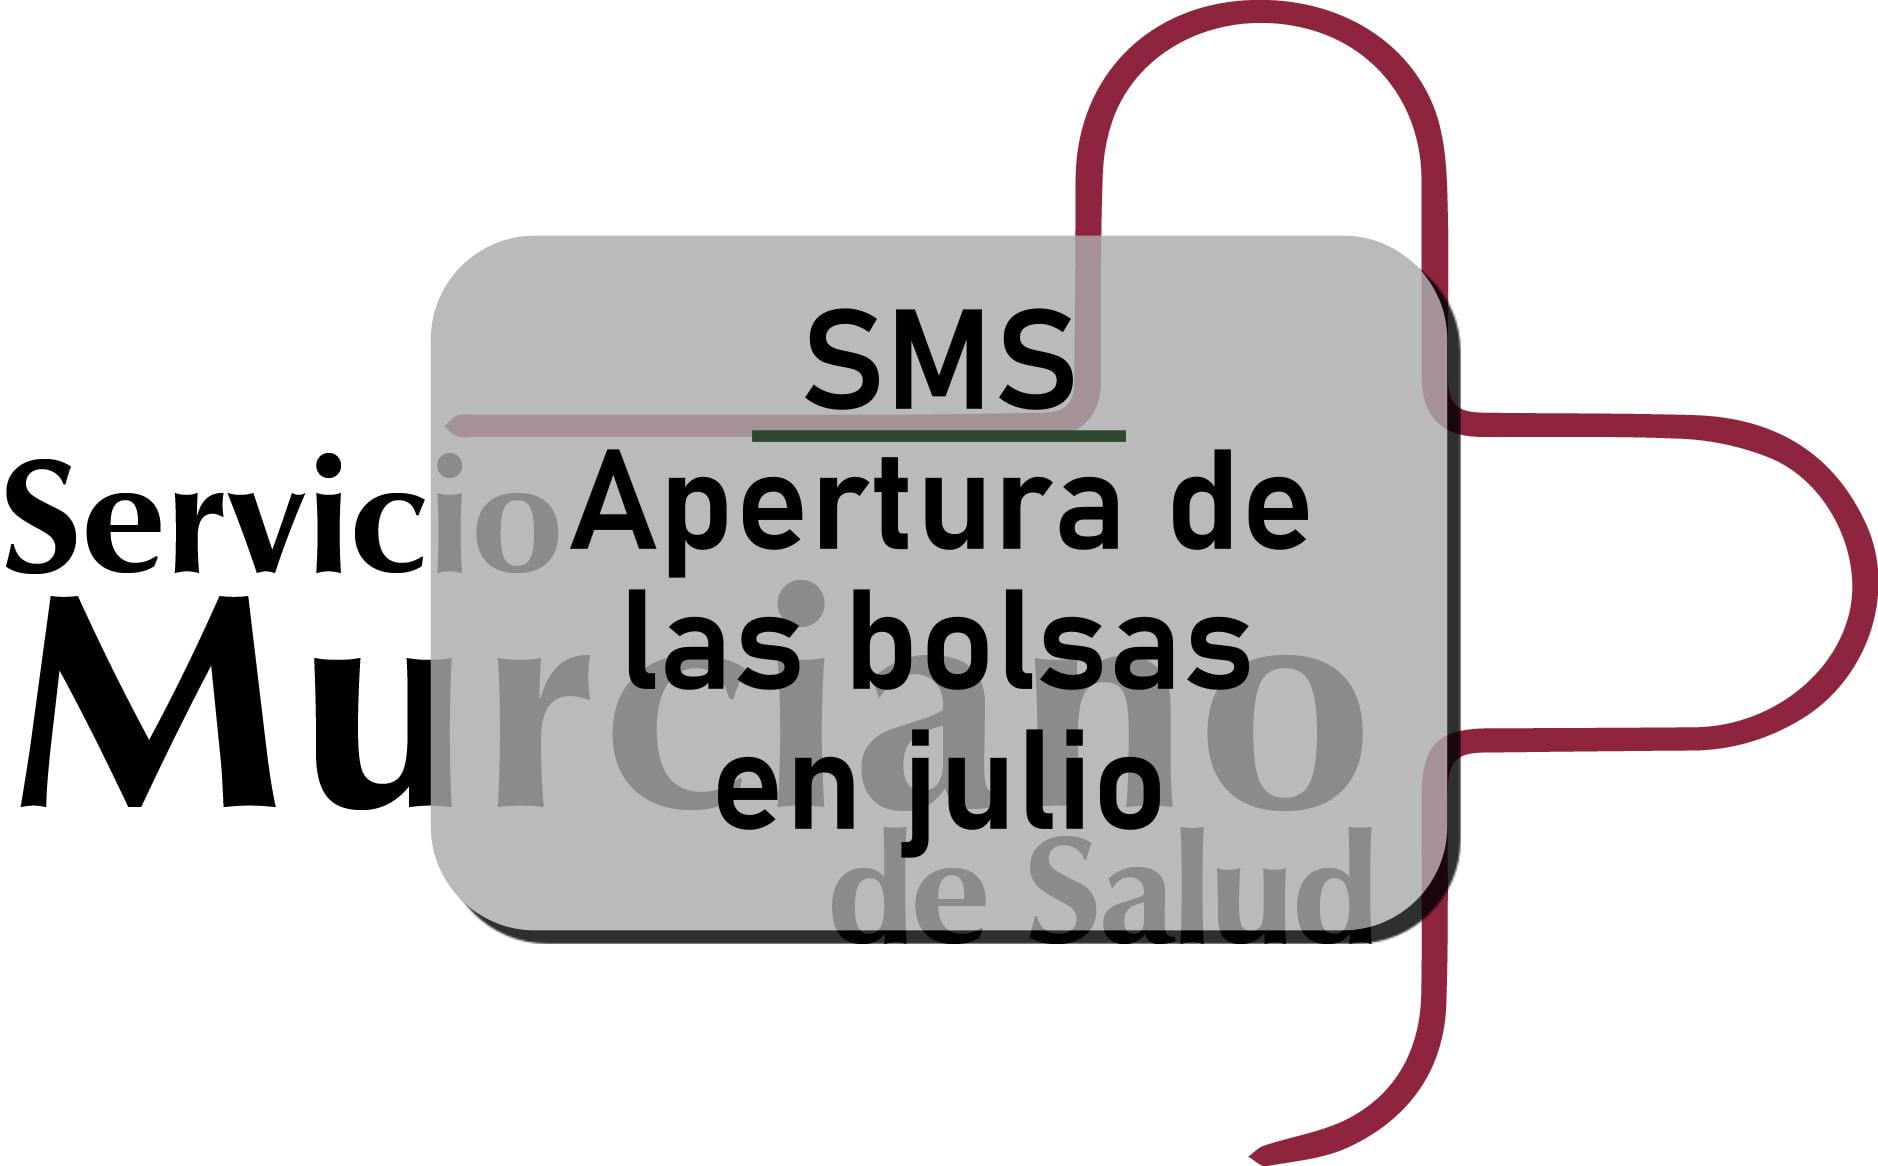 SMS | Nuevo calendario de de bolsas MURCIAOPOSICIONES.com